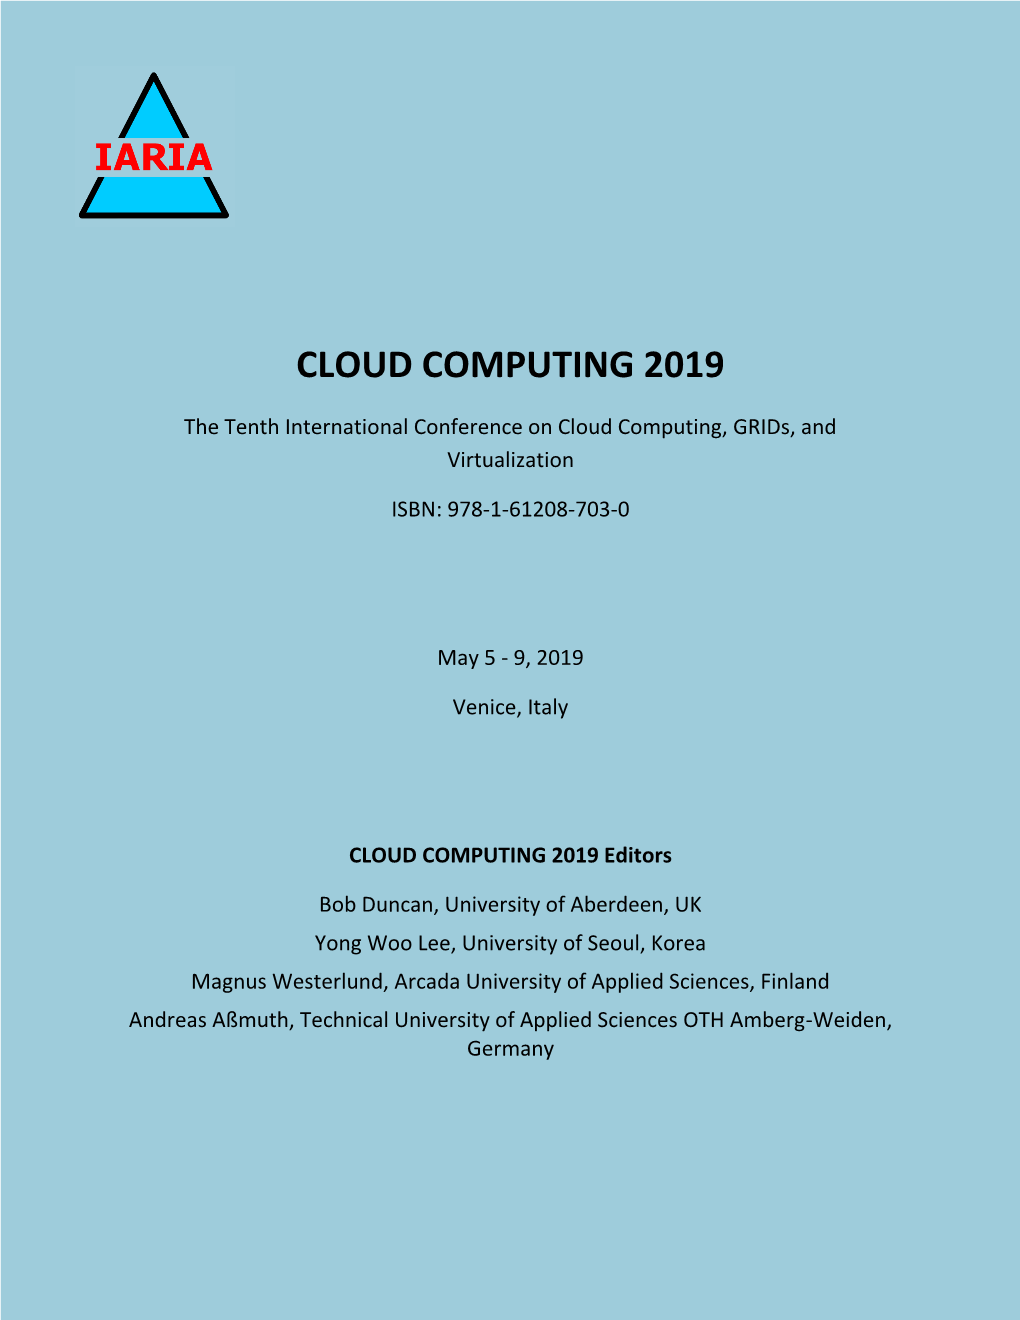 CLOUD COMPUTING 2019 Proceedings